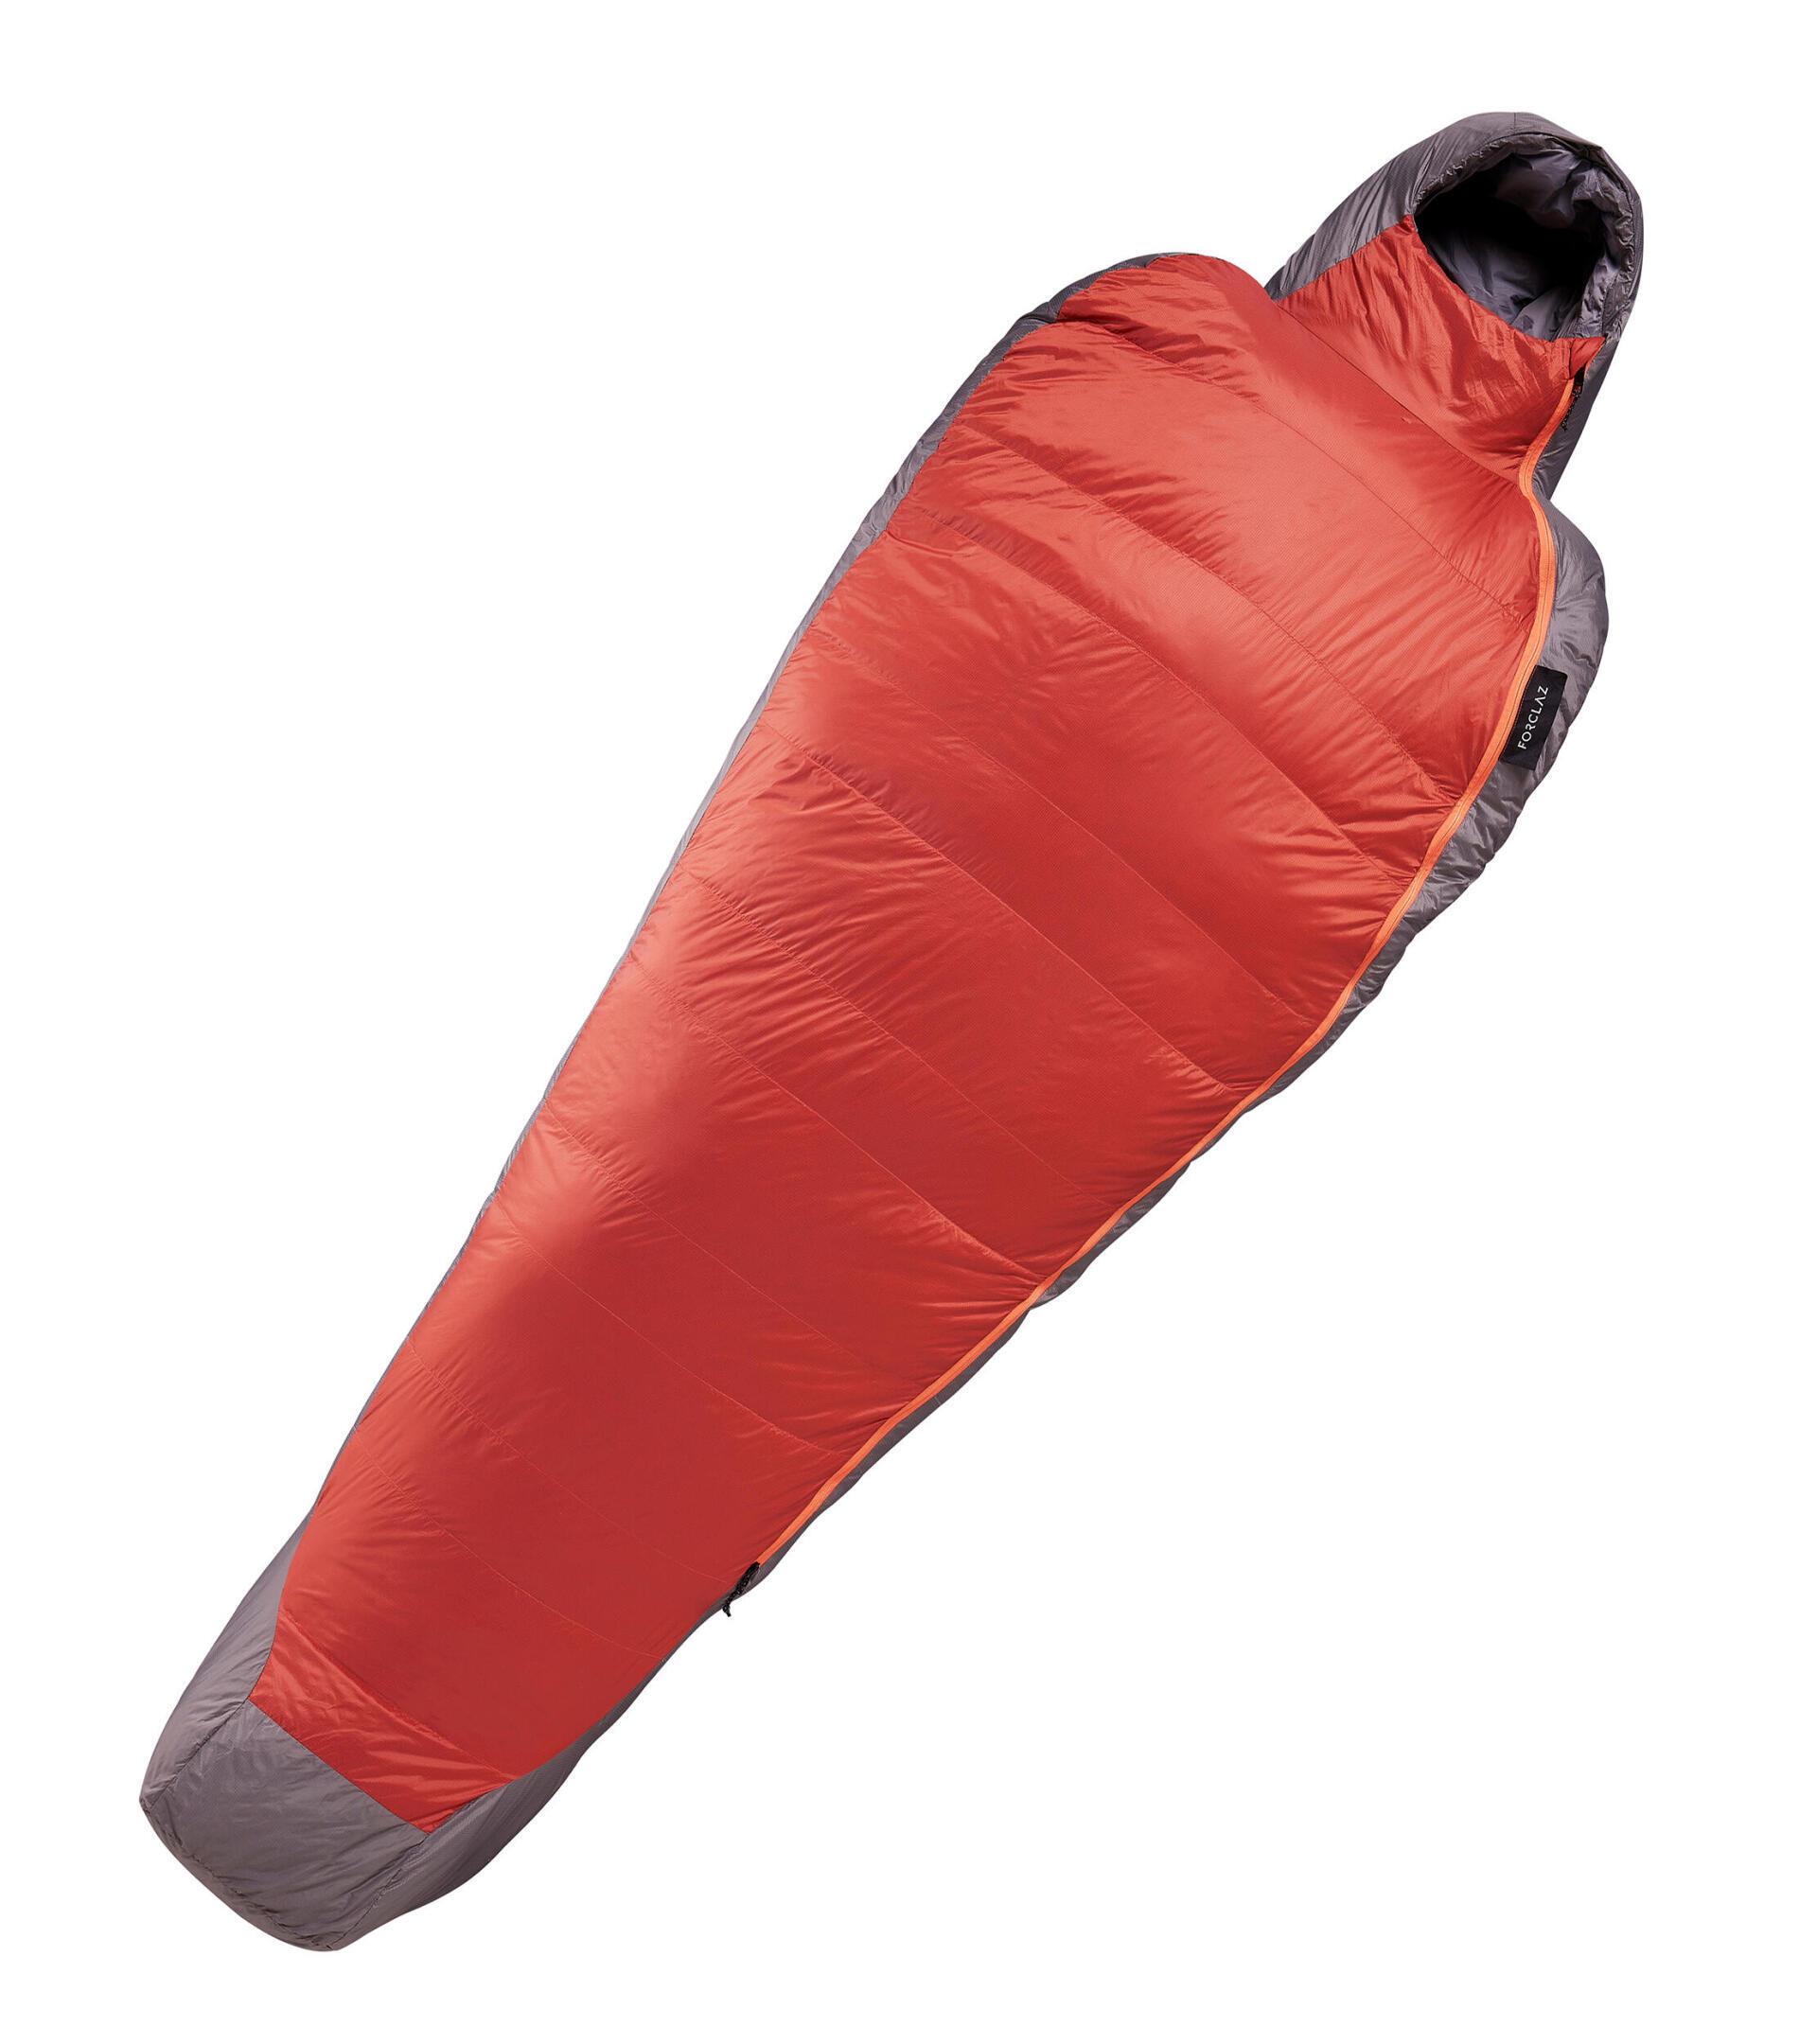 Sarcophagus sleeping bag